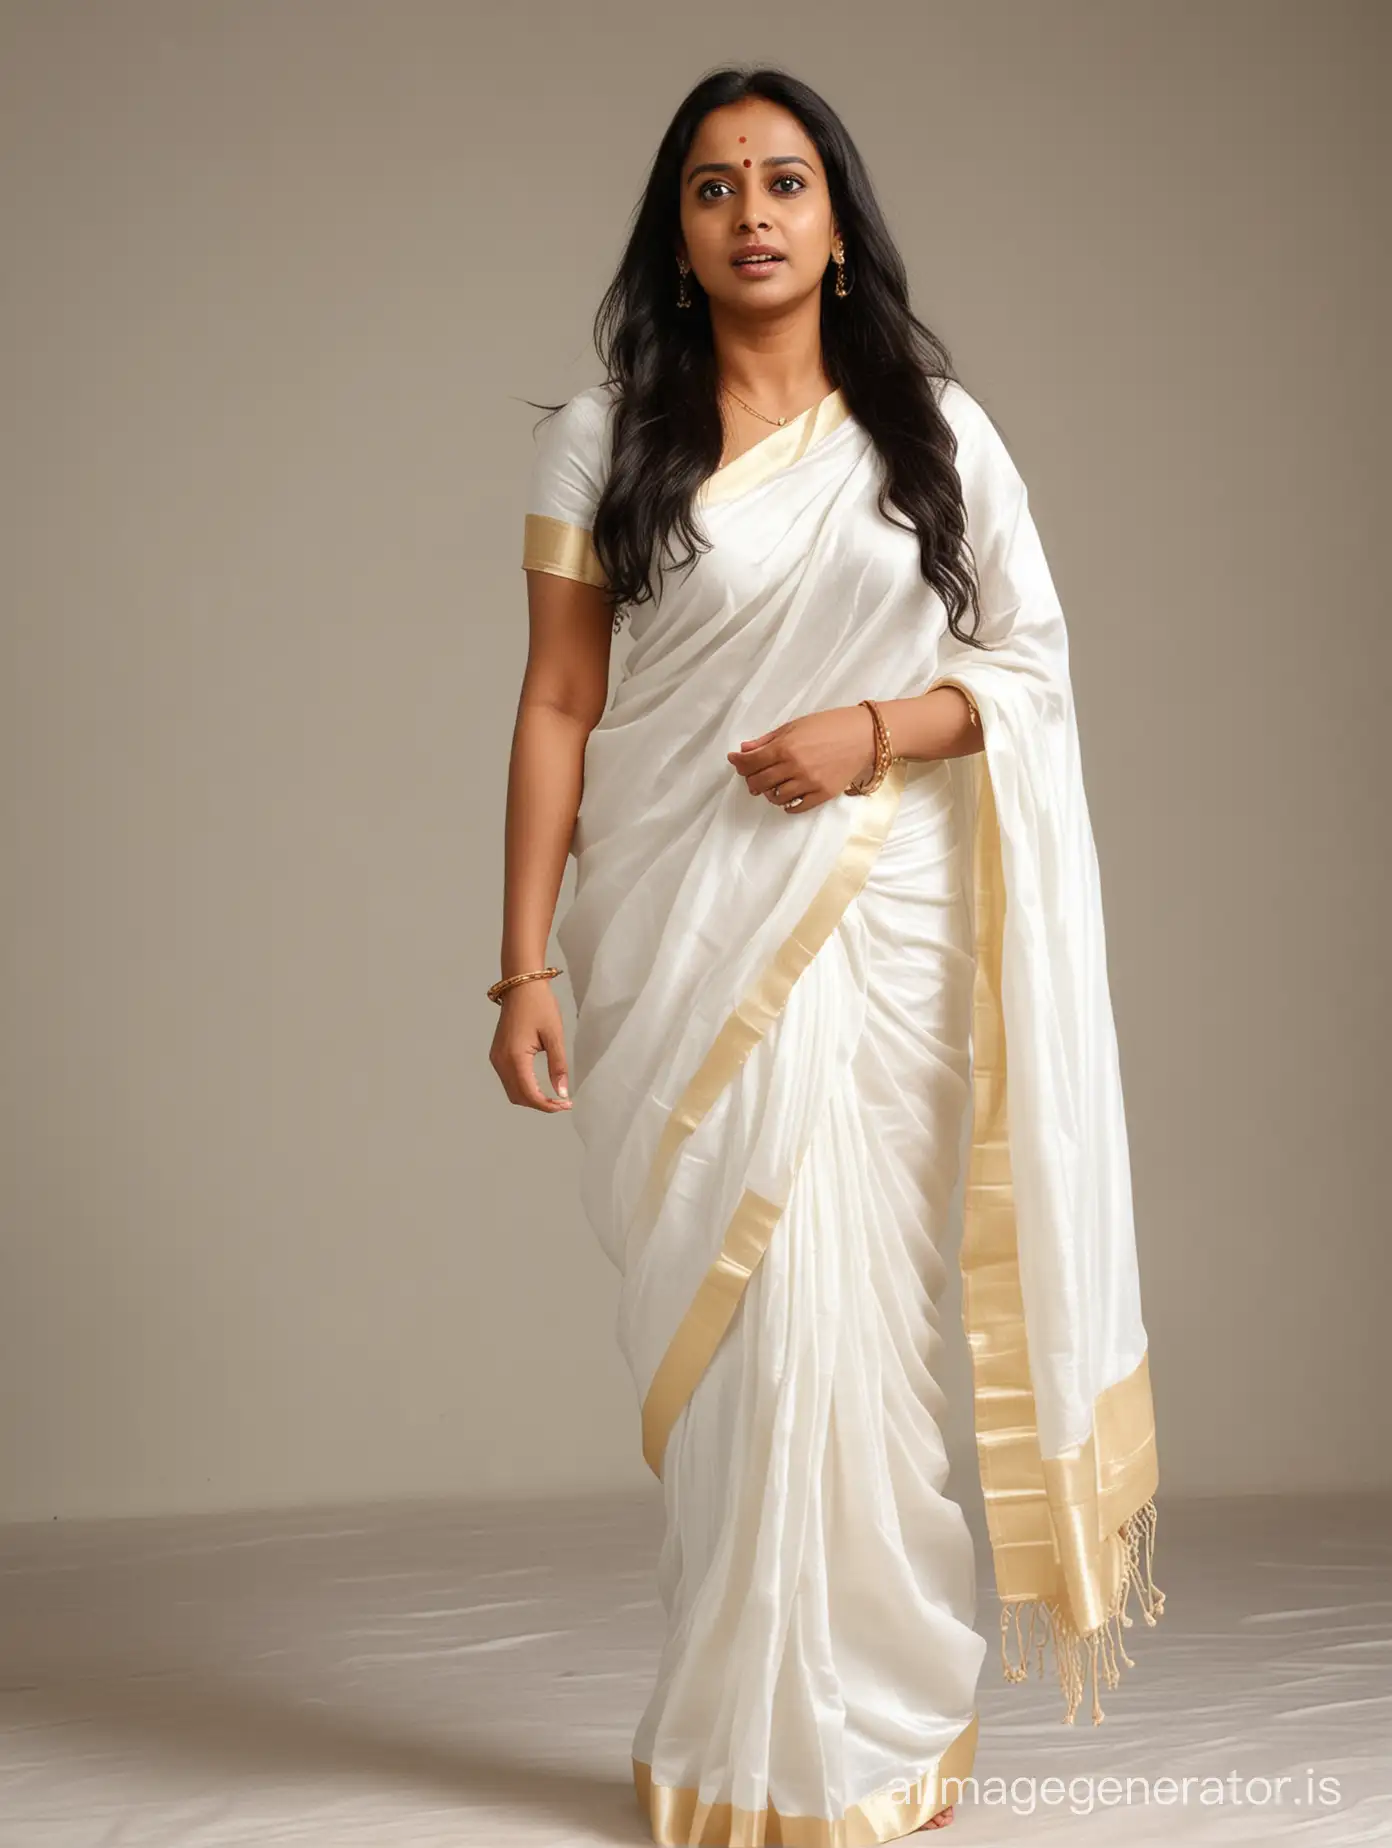 Angry-Kerala-Woman-in-Resplendent-White-Silk-Saree-resembling-Malayalam-Actress-Shalu-Menon